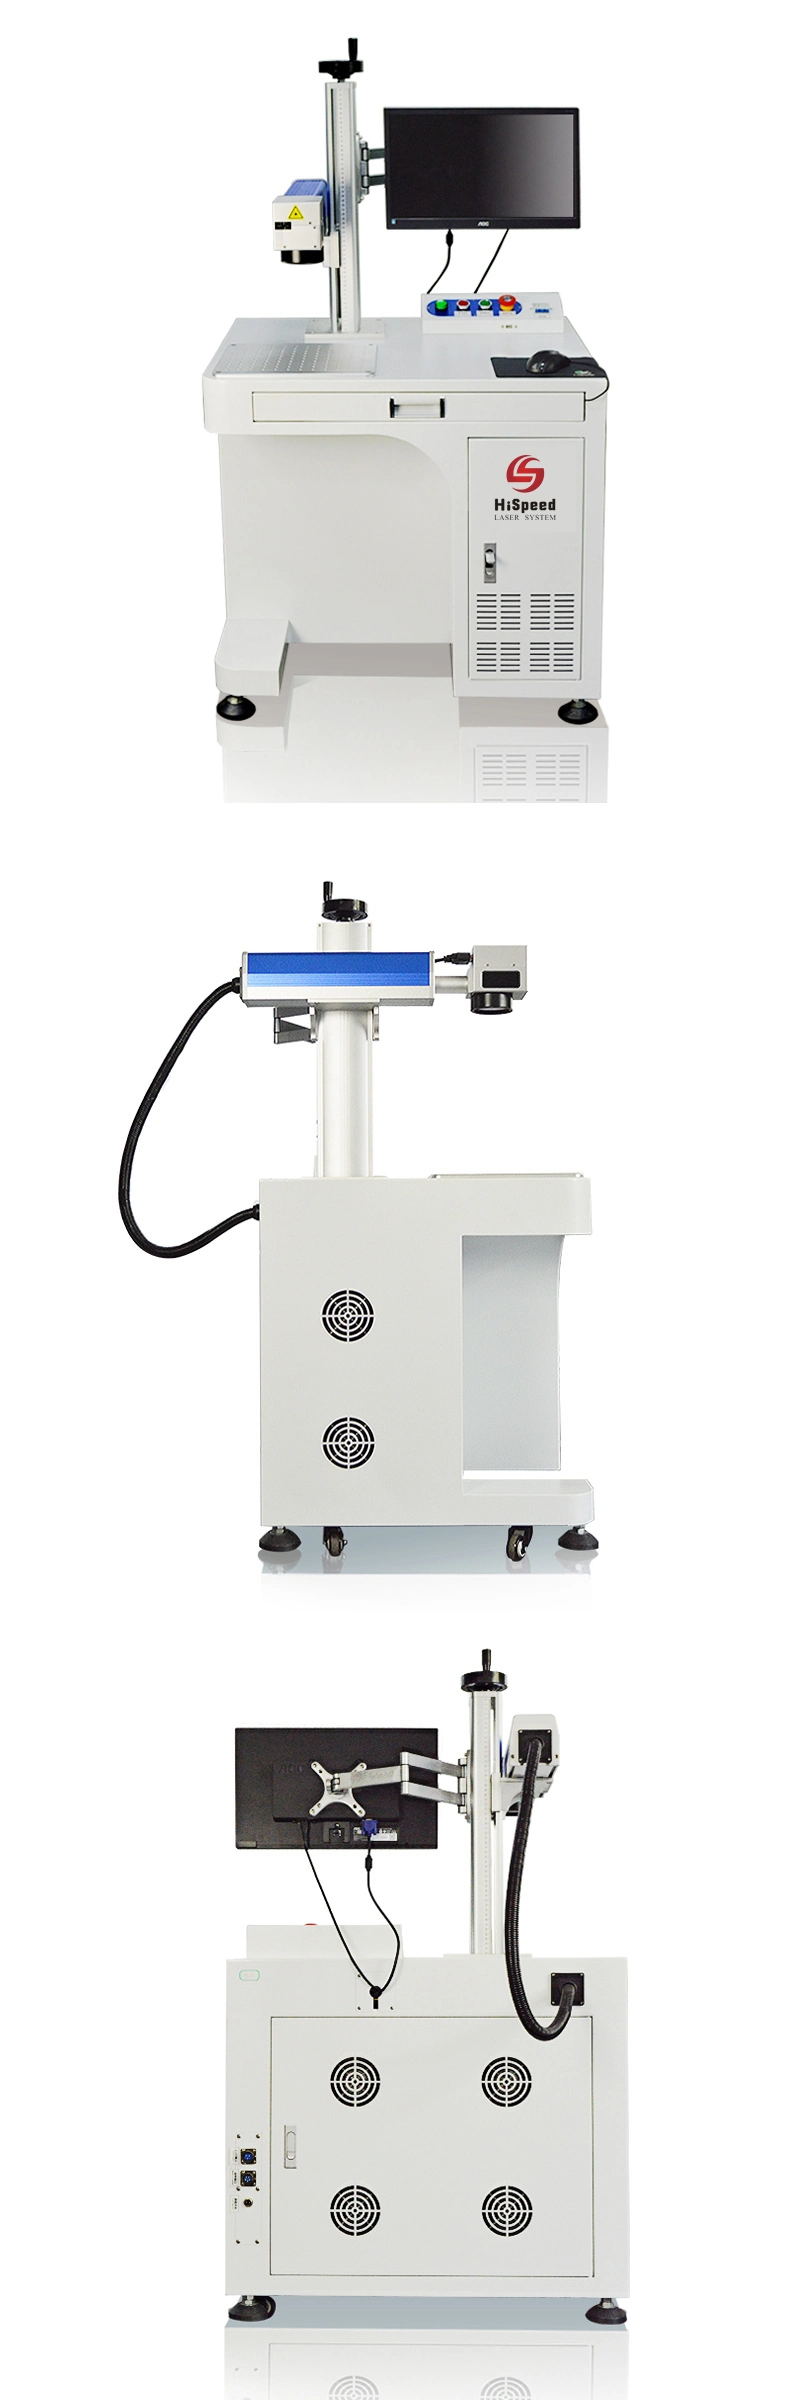 Chinese Manufactory Laser Engraving Machine for Molds Fiber Laser Marker